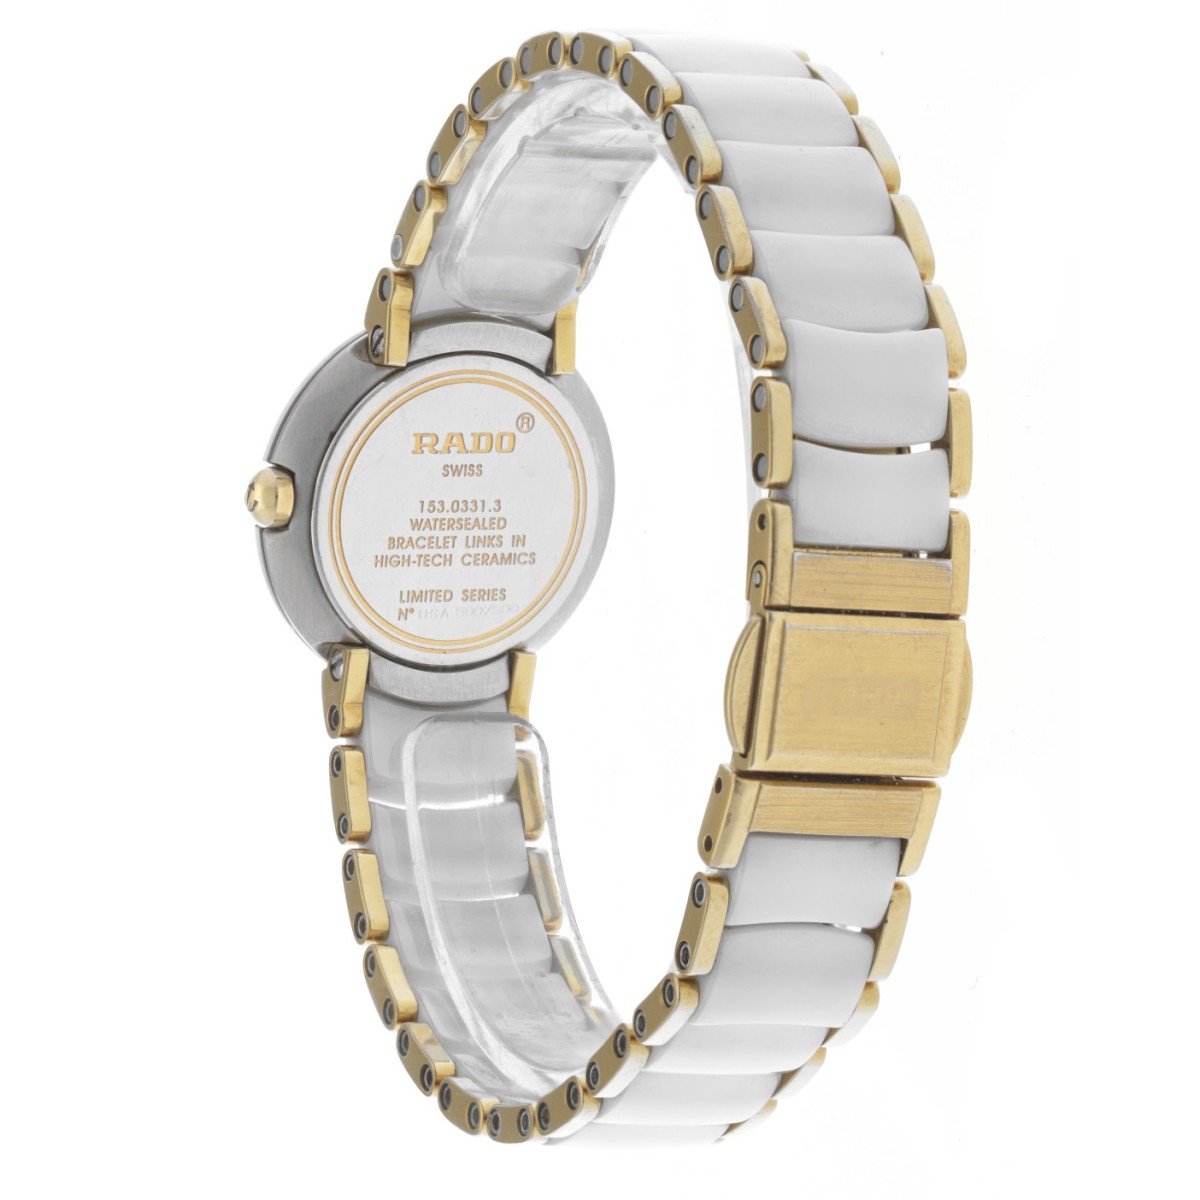 Rado Jubilé Limited Series 153.0331.3 - Ladies watch - Image 3 of 6